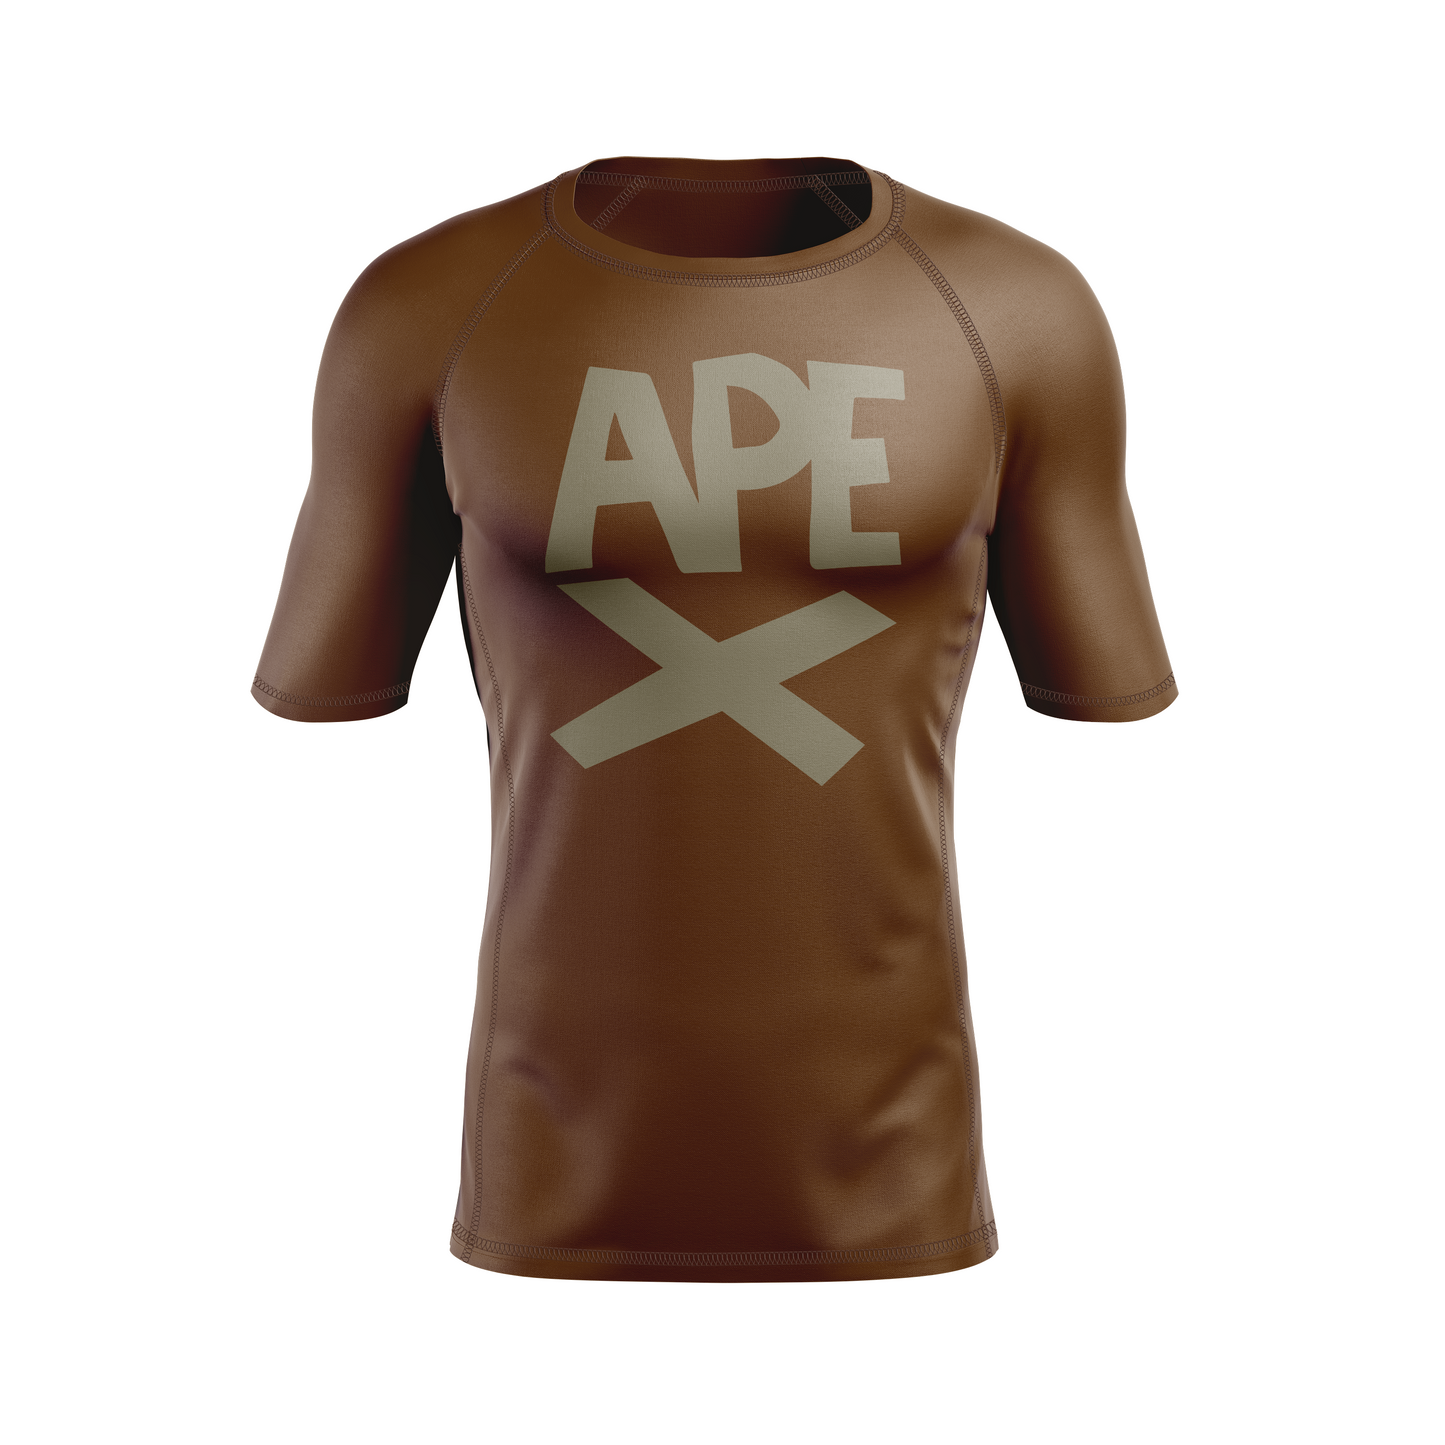 Apex Grappling men's rash guard Ape X, brown